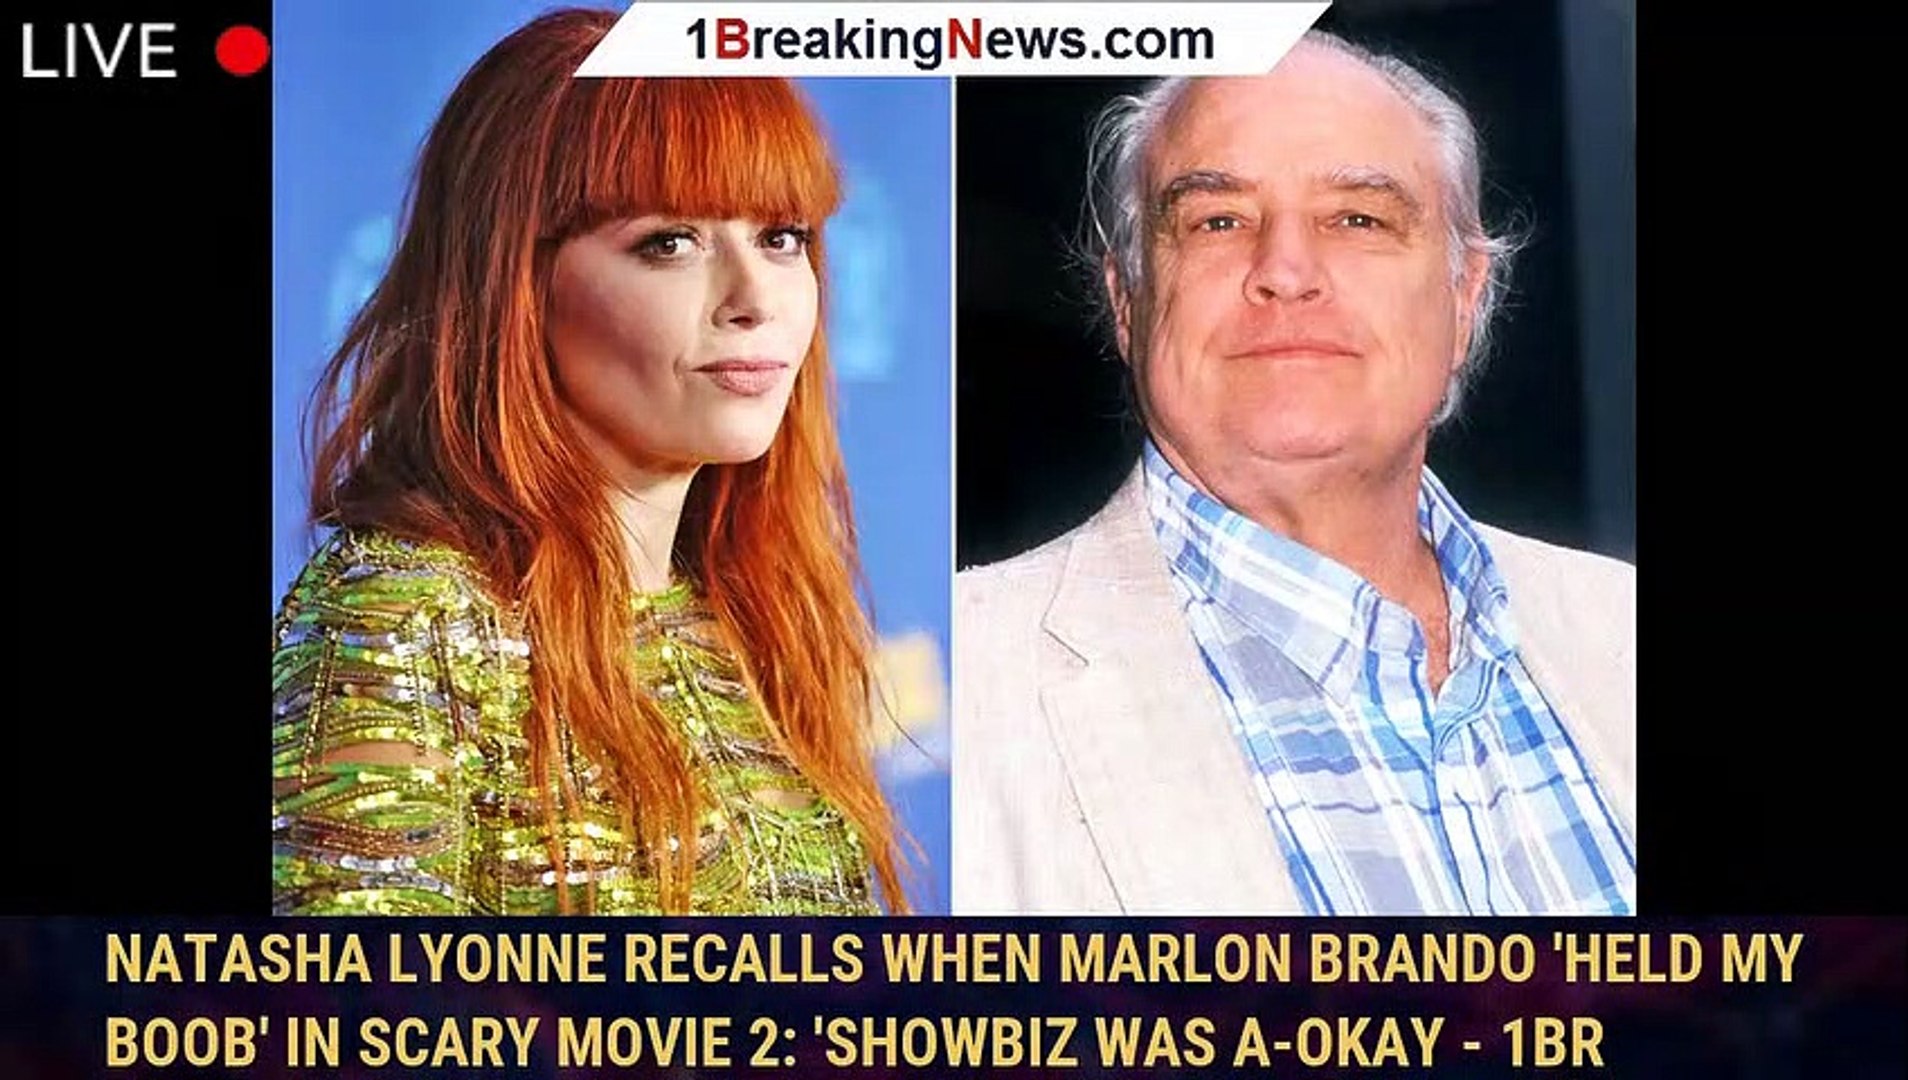 Natasha Lyonne says Marlon Brando held her boob while filming